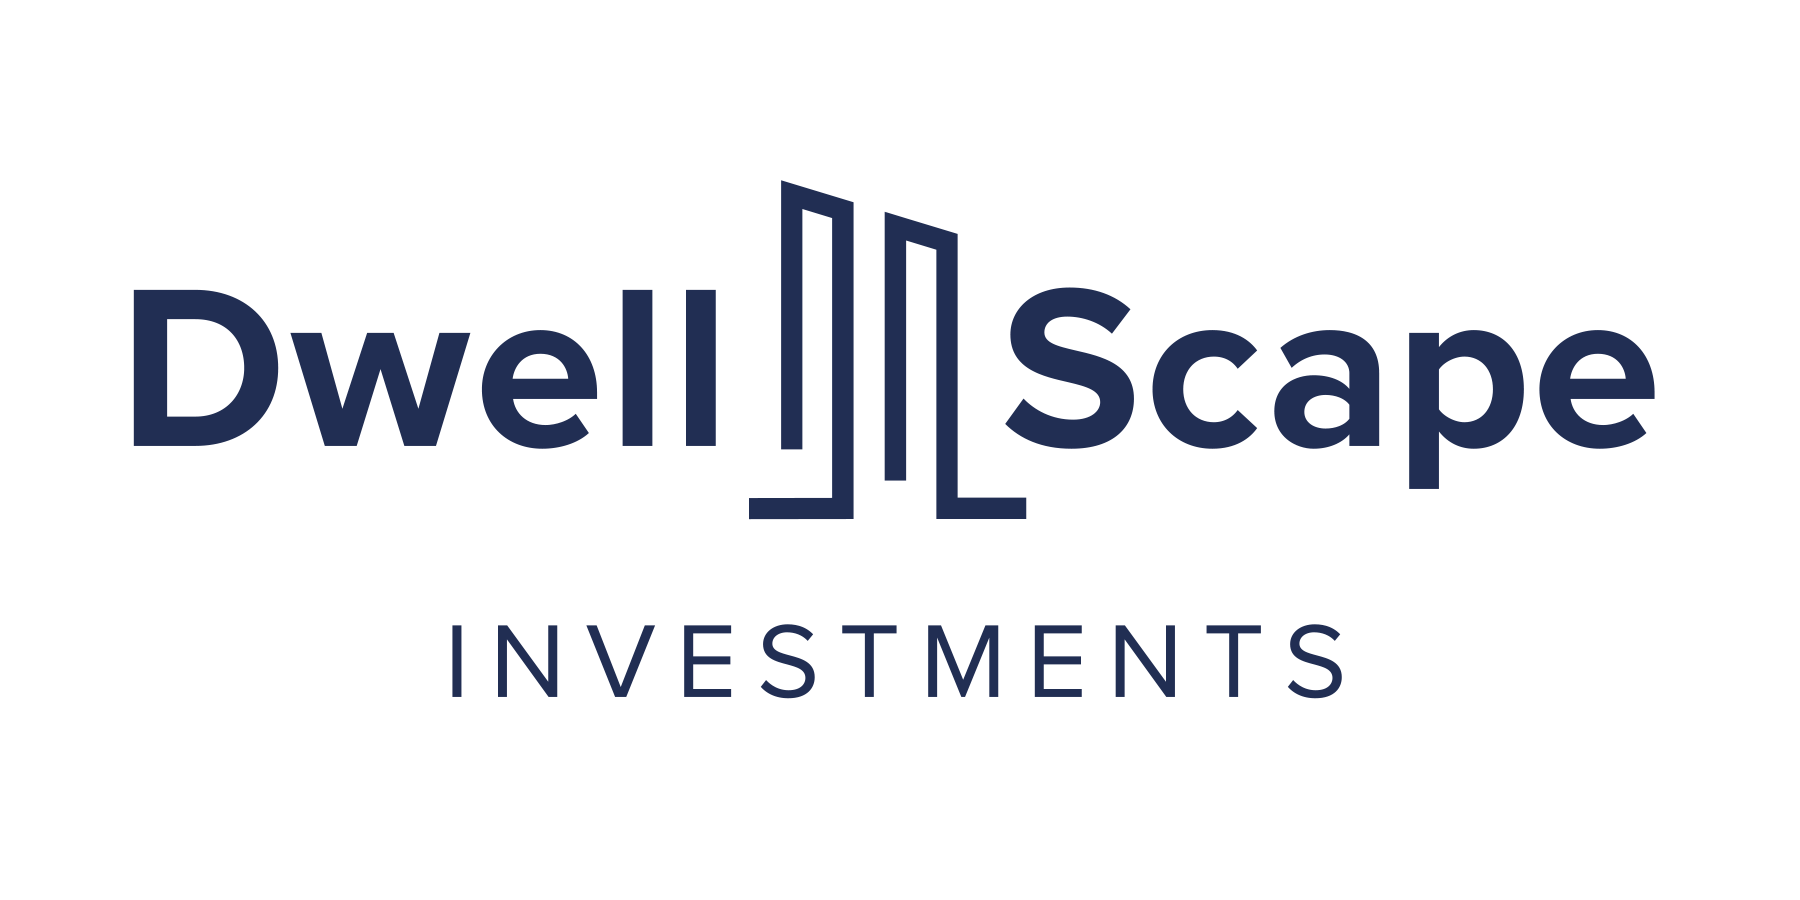 DwellScape Investments